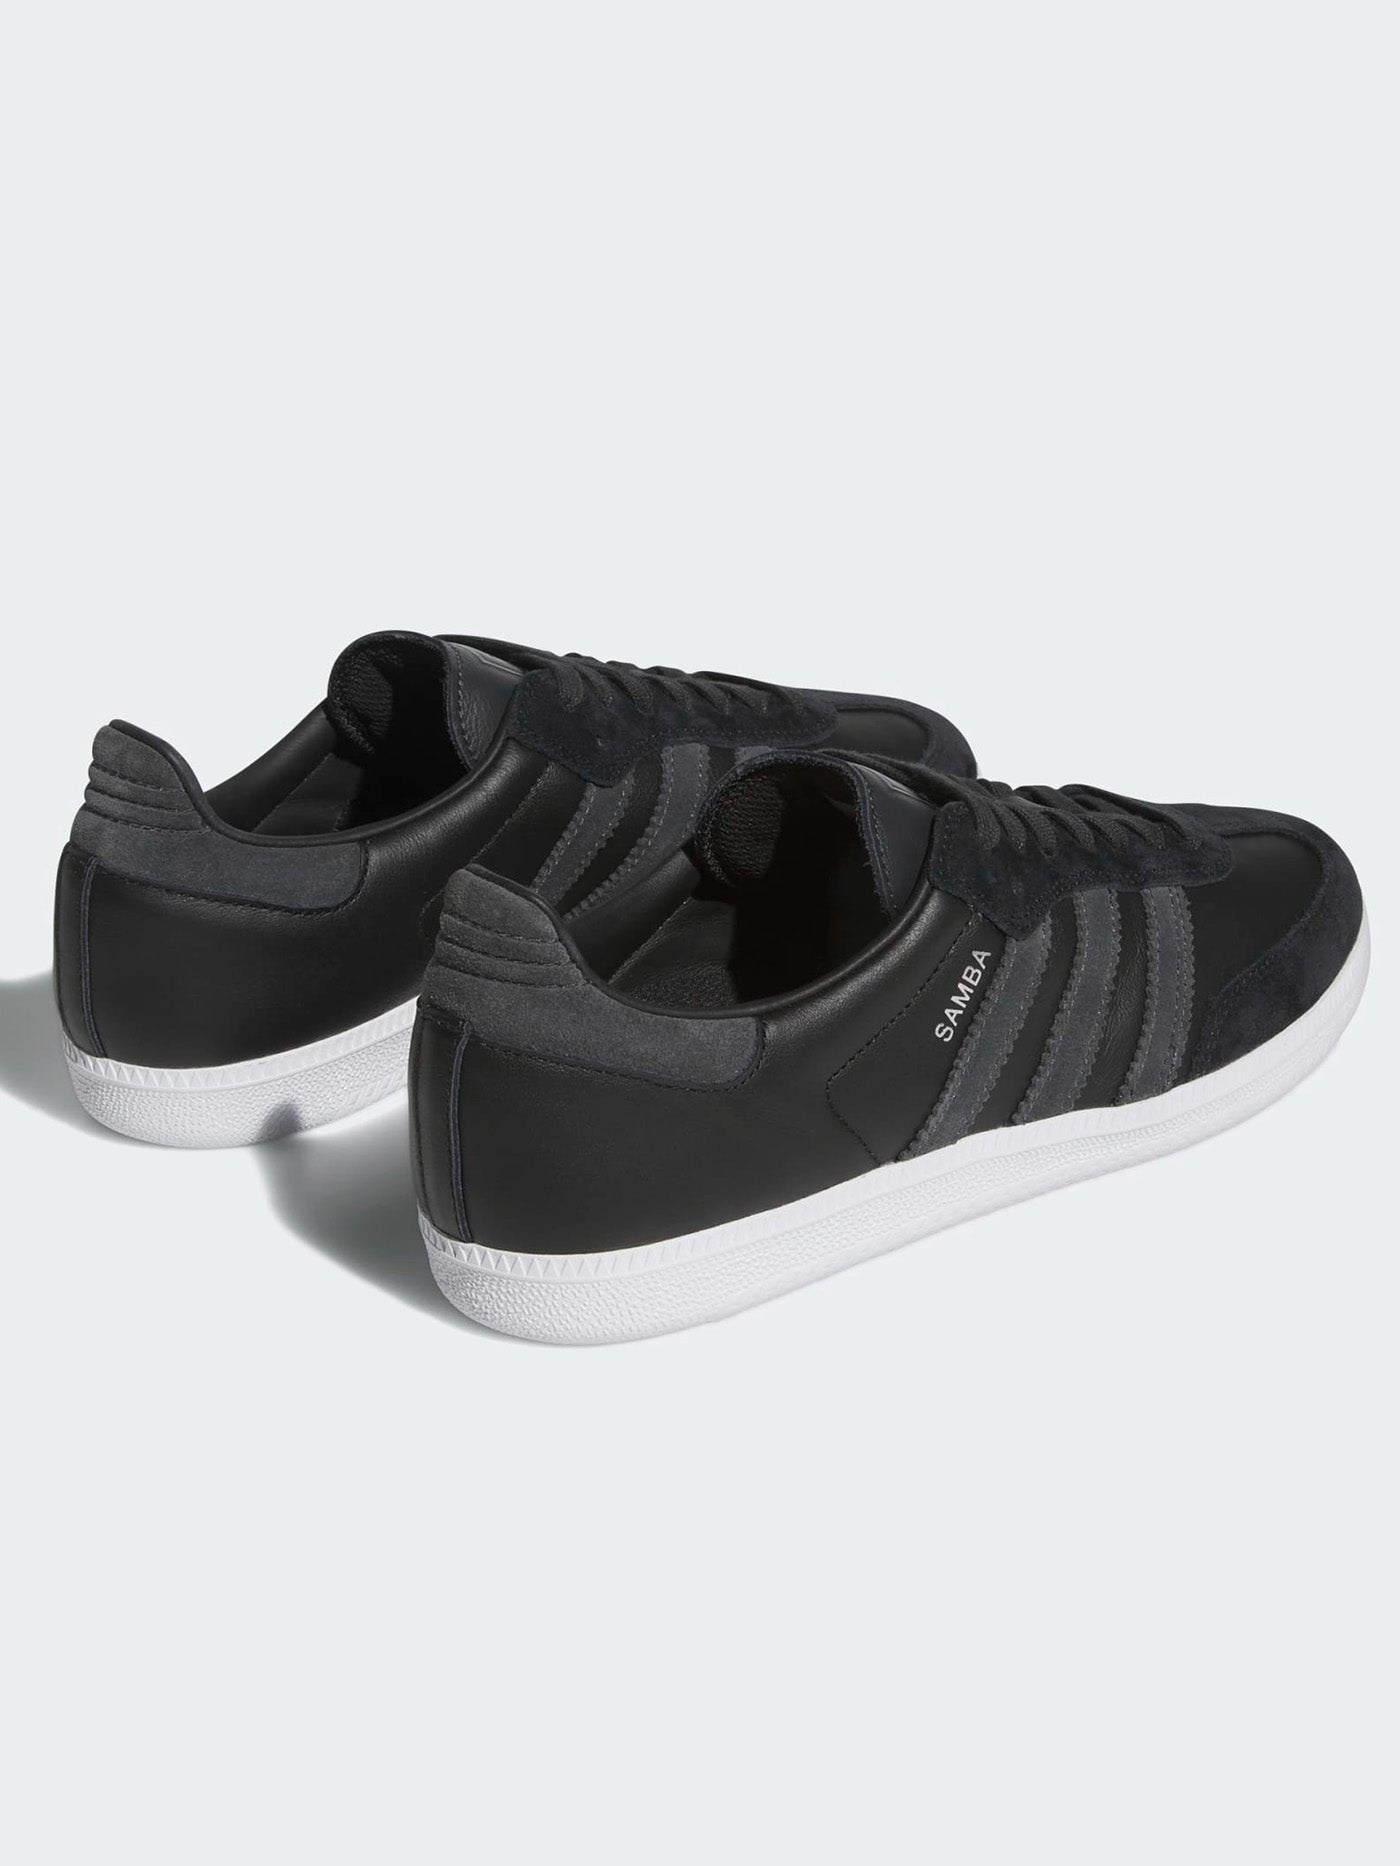 Adidas Fall 2023 Samba ADV Core Black/Carbon/Silver Shoes | EMPIRE